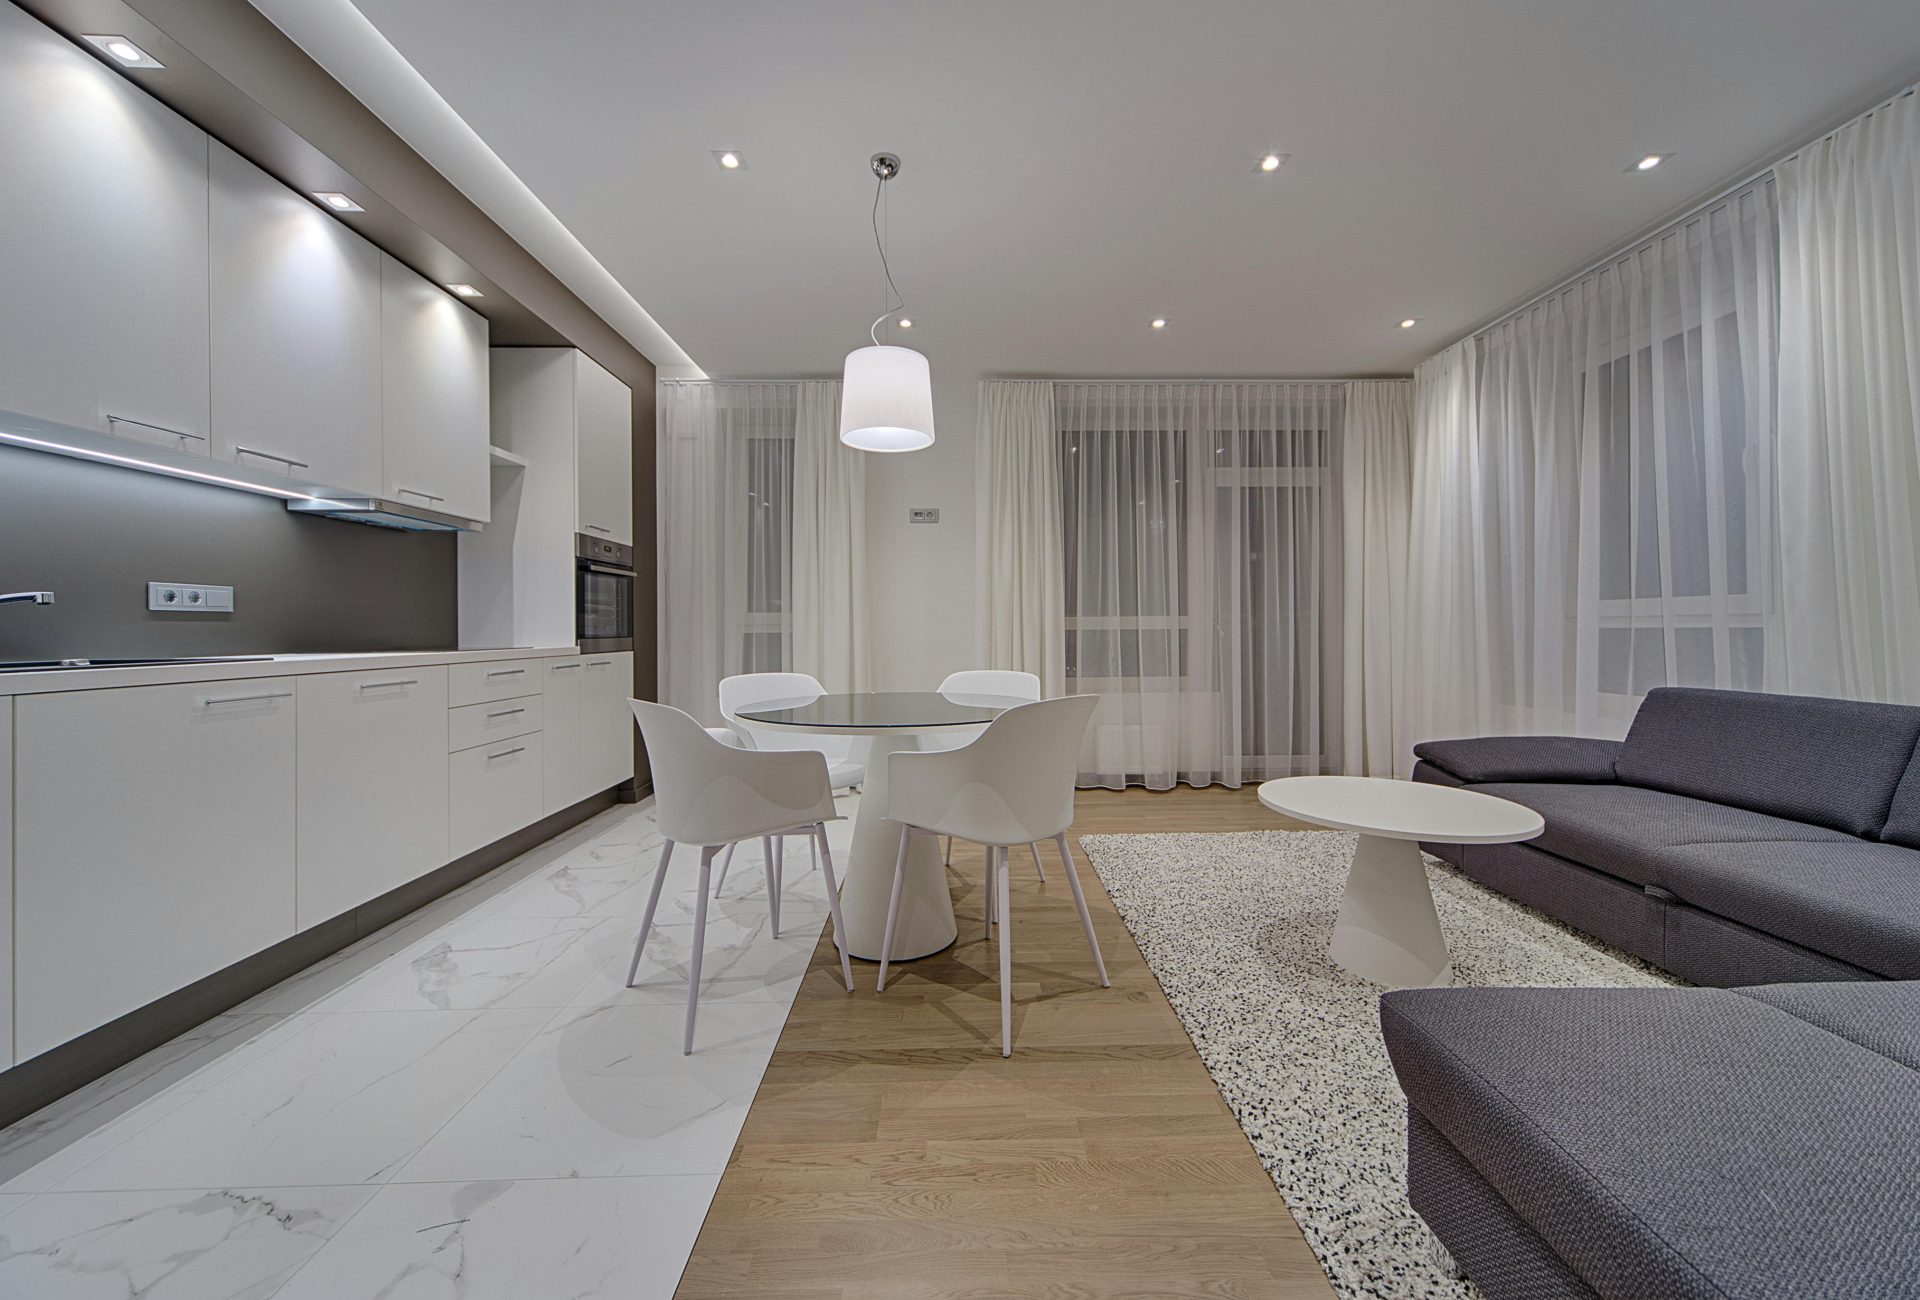 Design Principles for a Gray Living Room